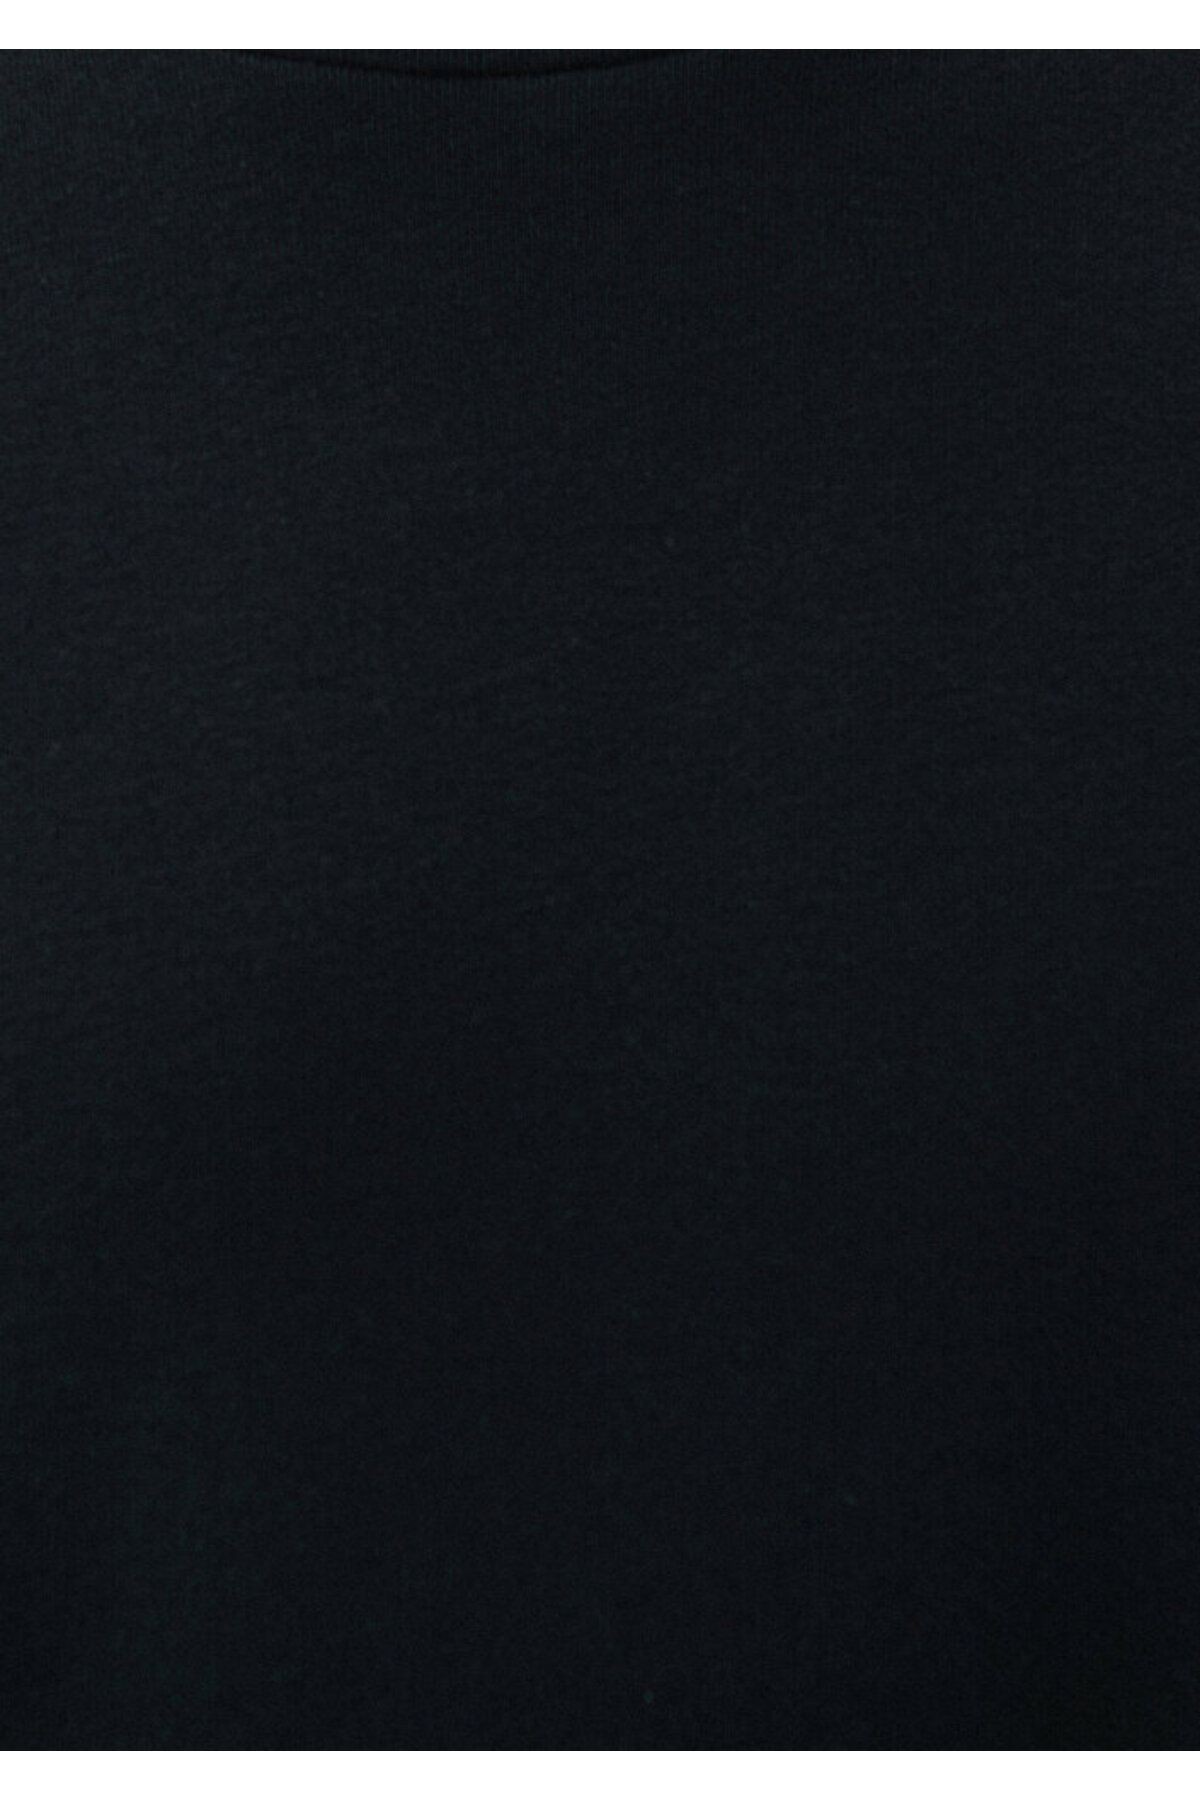 Mavi - Uzun Kollu Siyah Basic Tişört Loose Fit